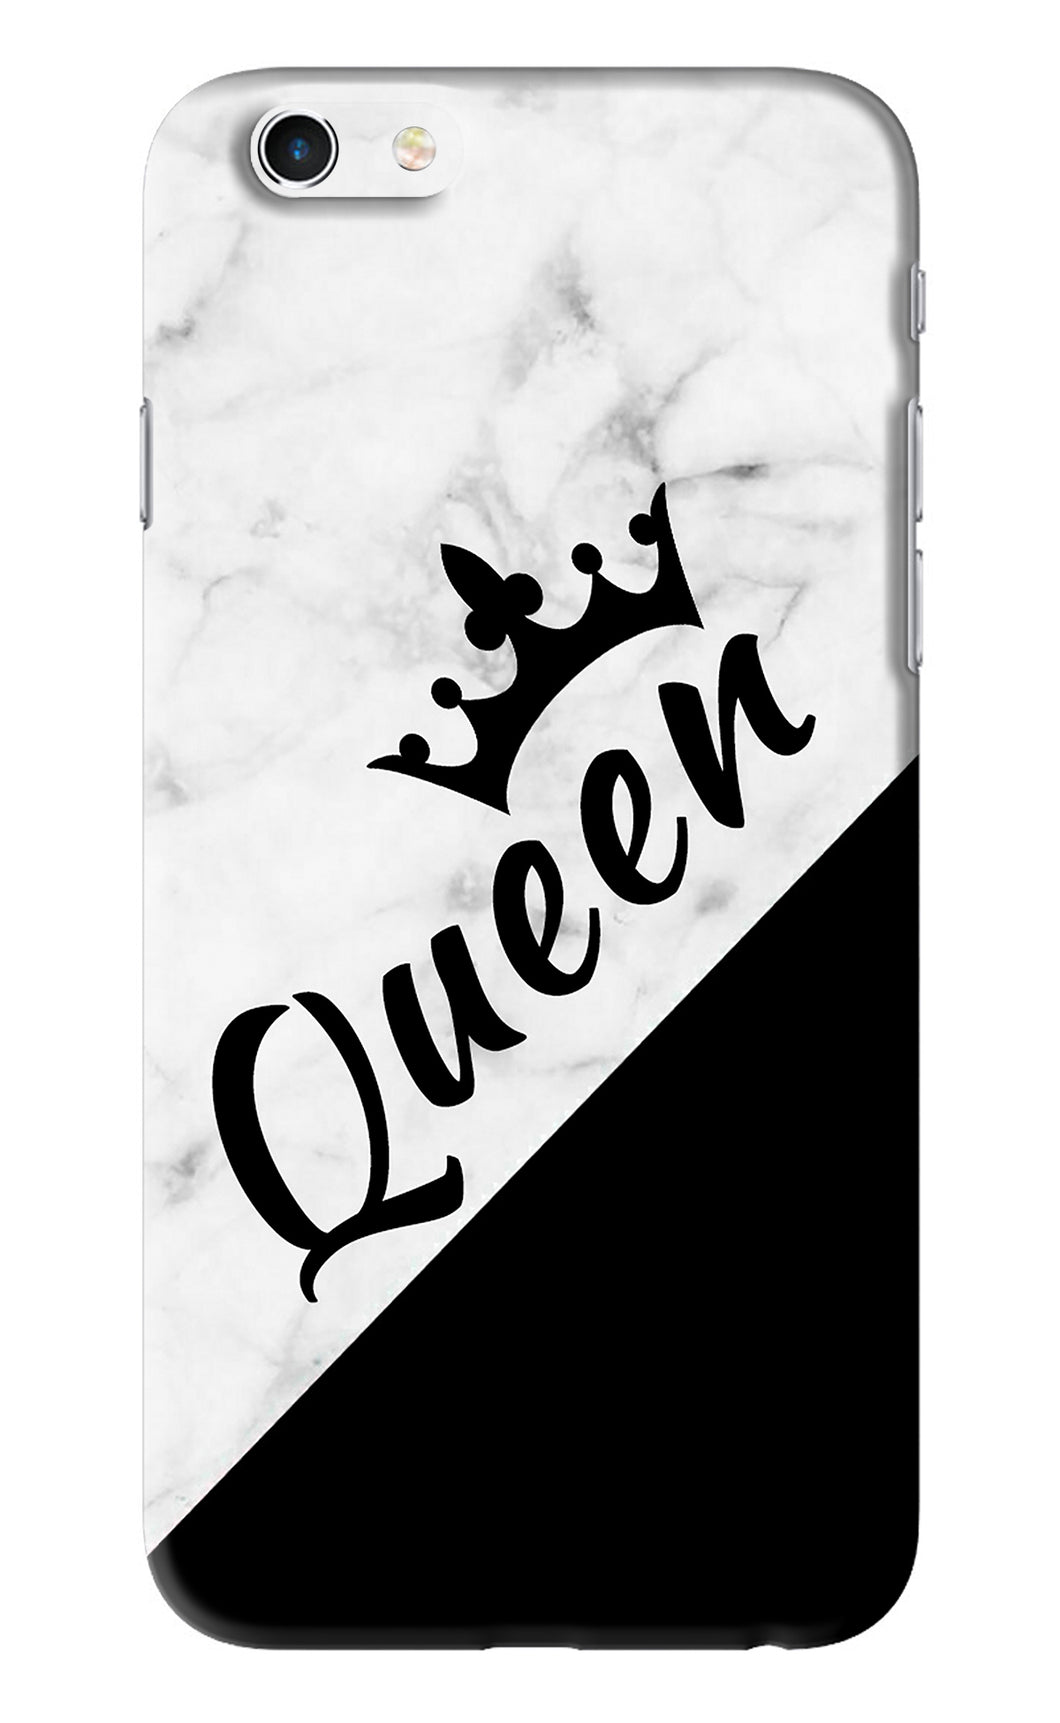 Queen iPhone 6S Back Skin Wrap